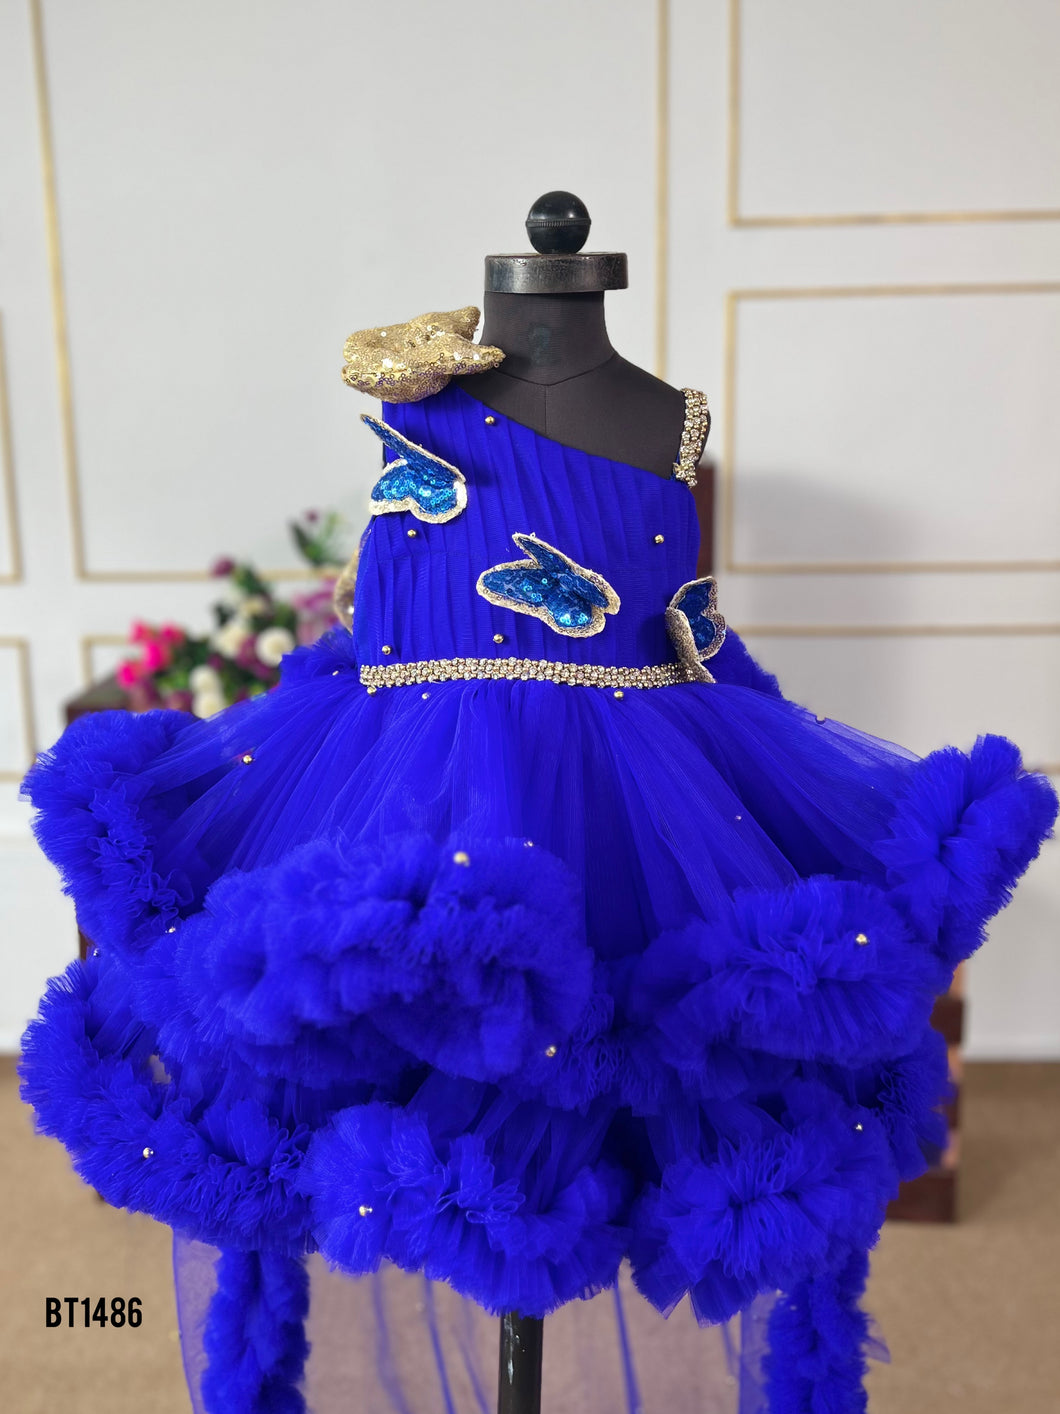 BT1486 Sapphire Elegance Dress - Dazzle in a Deep Blue Dream!